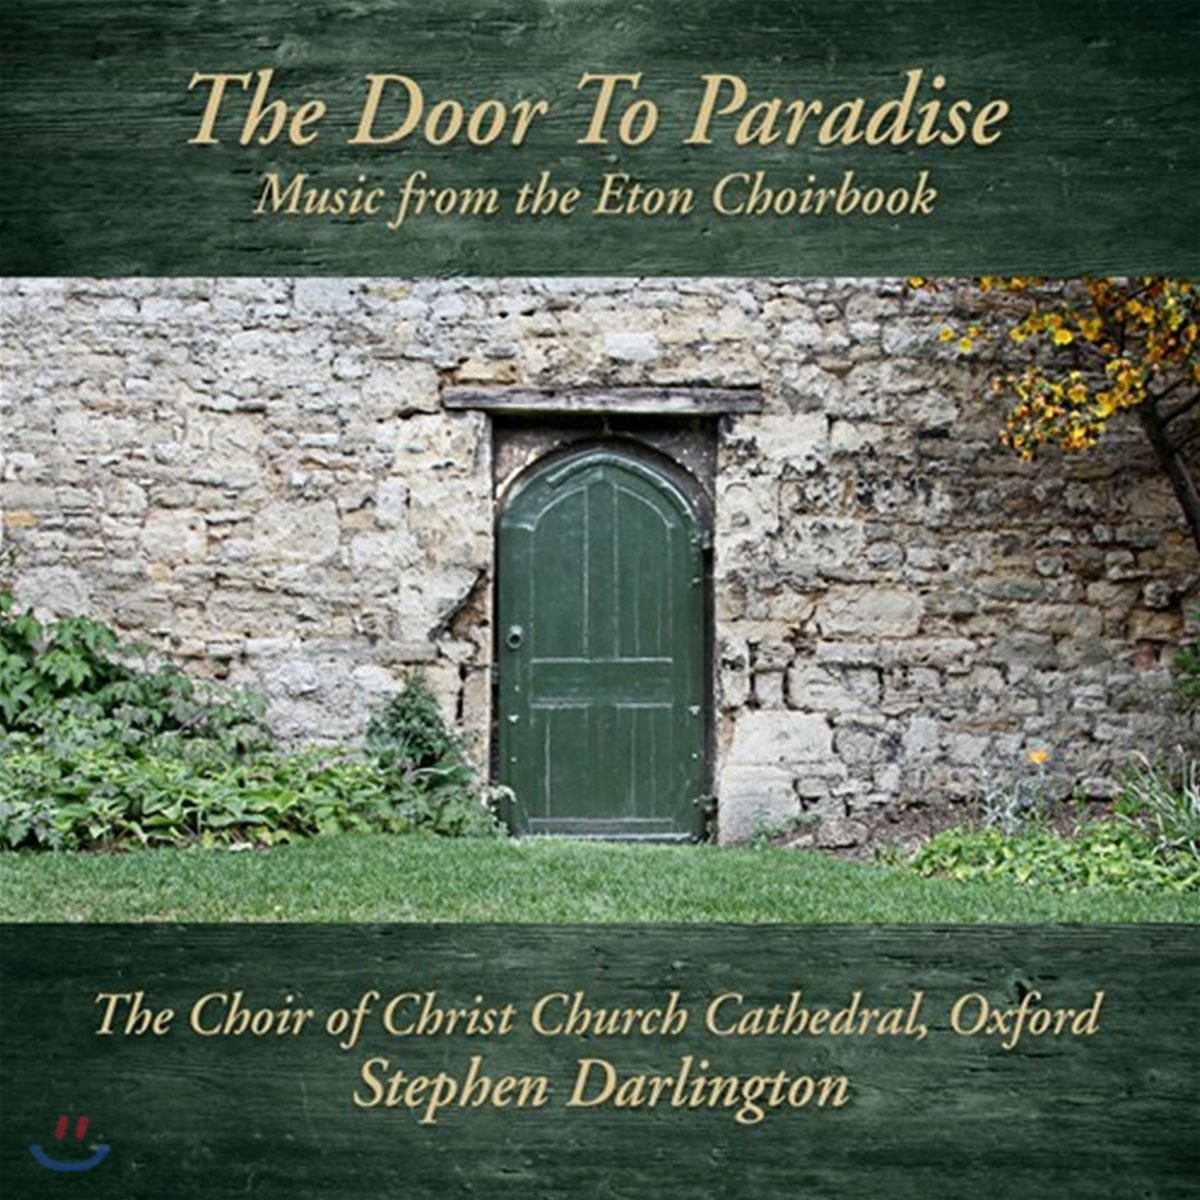 Stephen Darlington 천국으로 가는 문 - 이튼 합창곡집 (The Door To Paradise - Music from the Eton Choirbook)